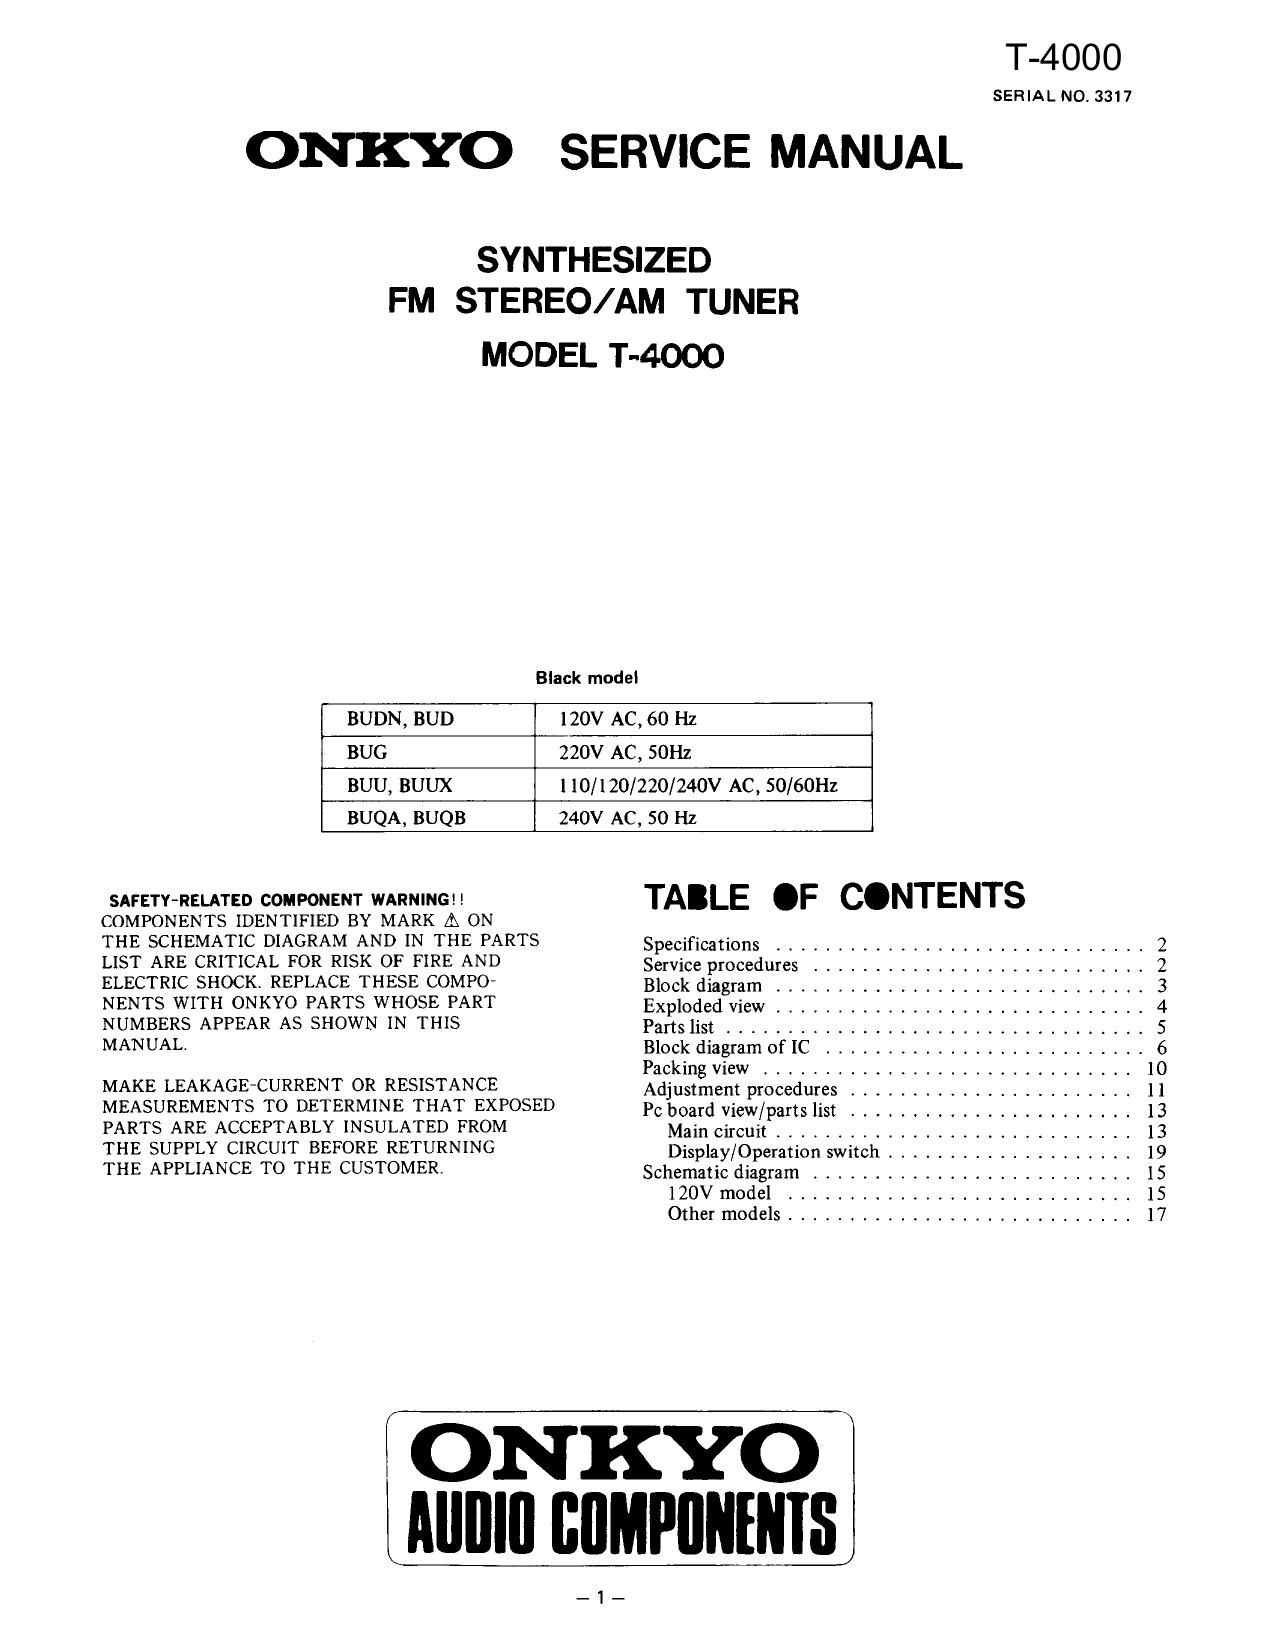 Onkyo T 4000 Service Manual